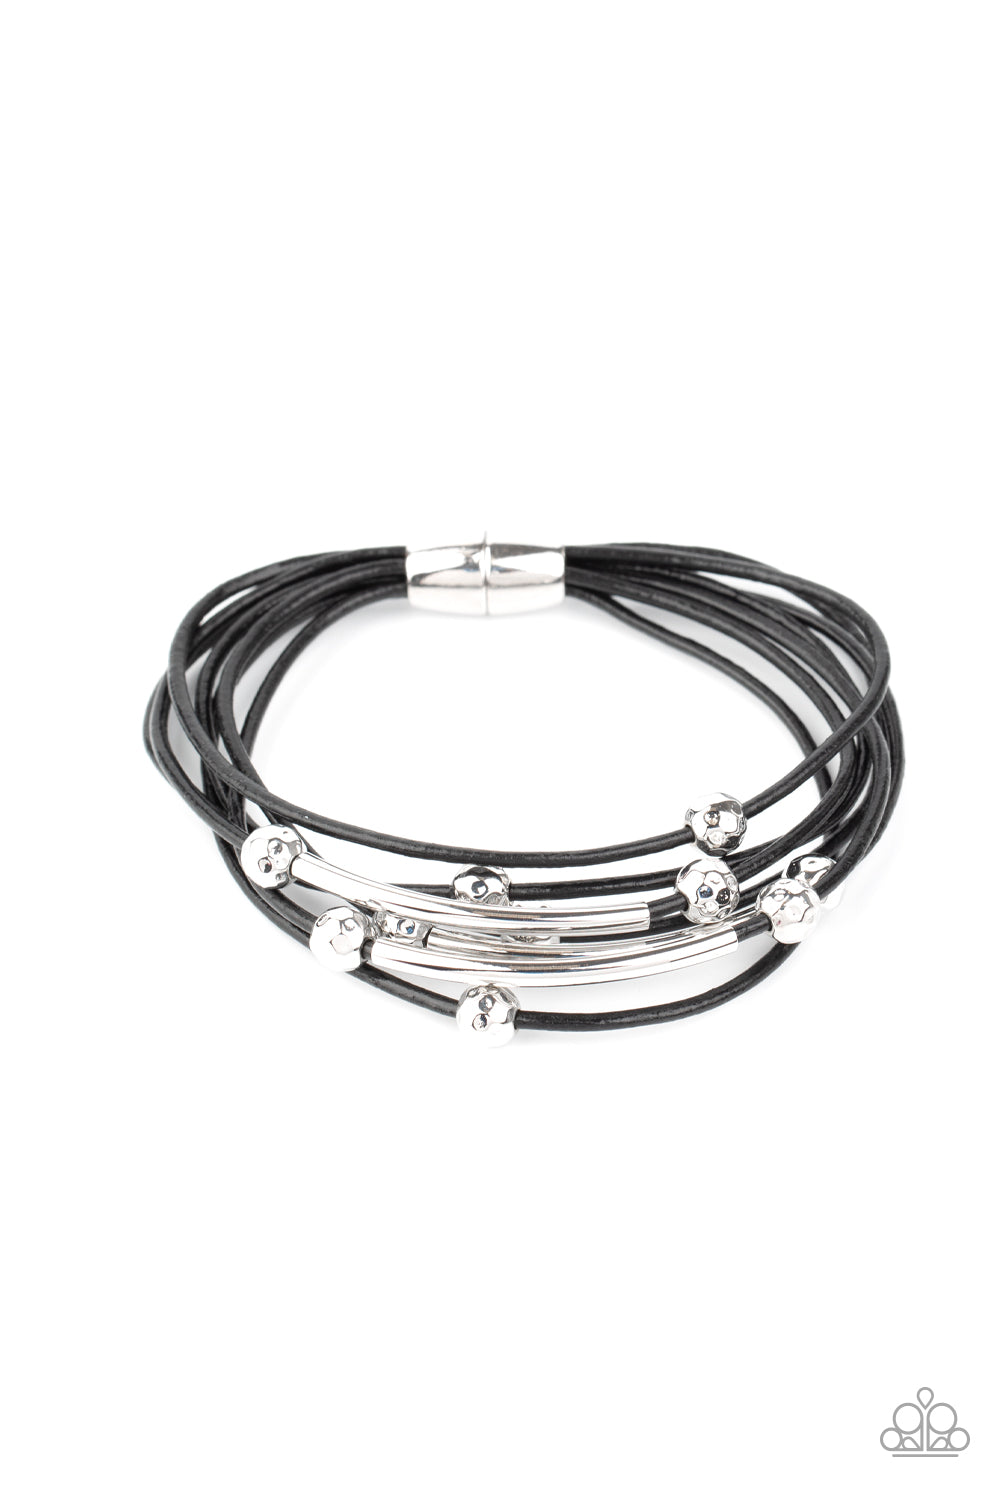 five-dollar-jewelry-black-bracelet-2-9-0320-paparazzi-accessories